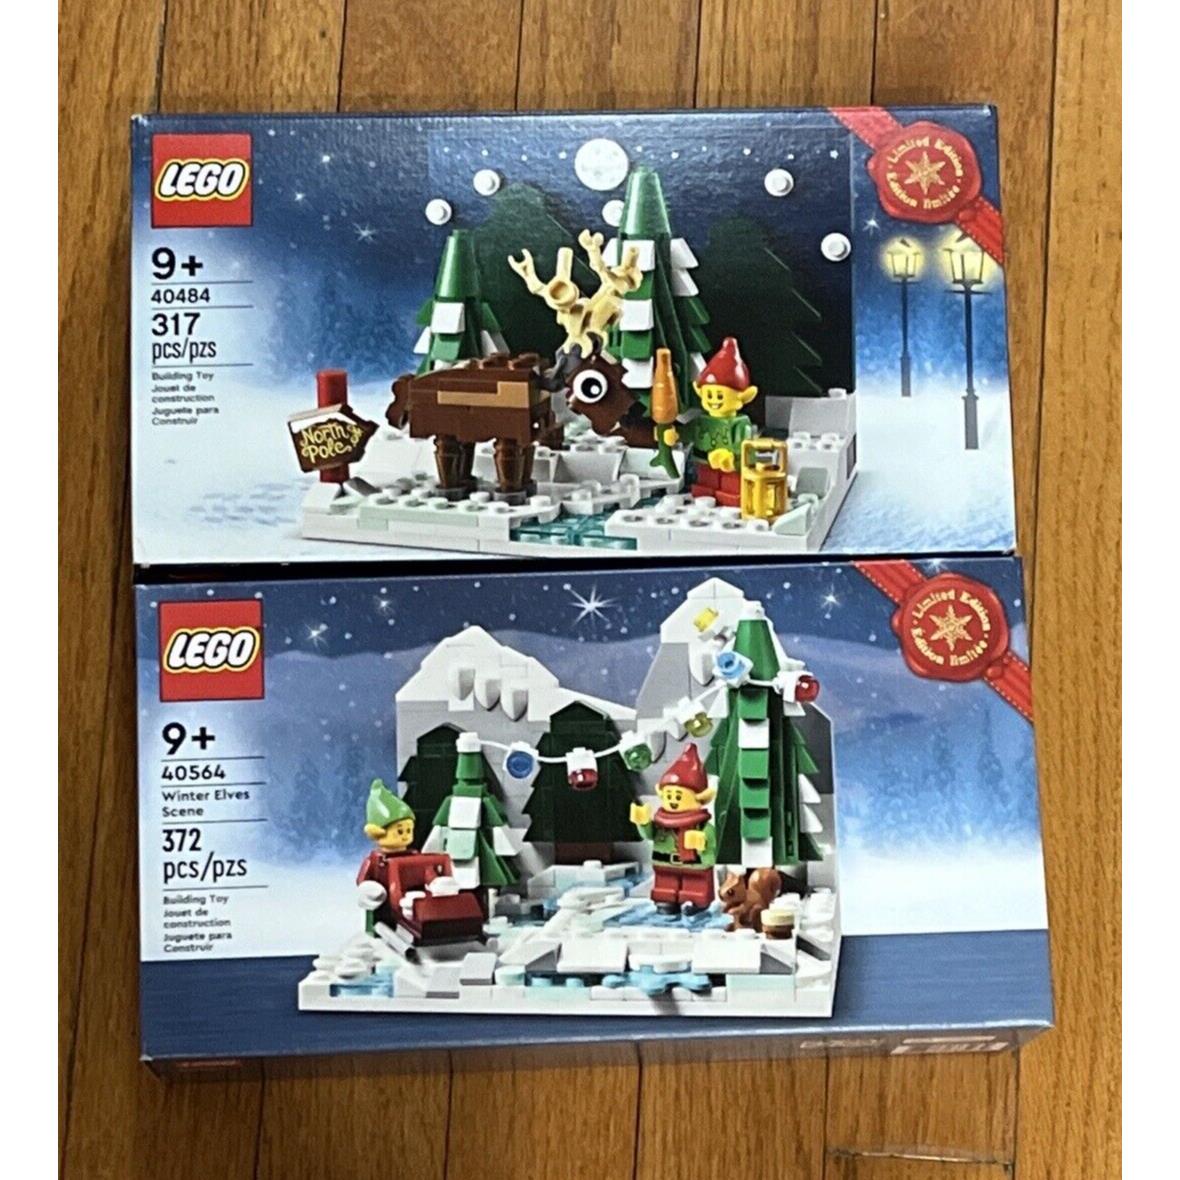 Lego Set 40484 Santa s Front Yard 40564 Winter Elves Scene Limited Edition